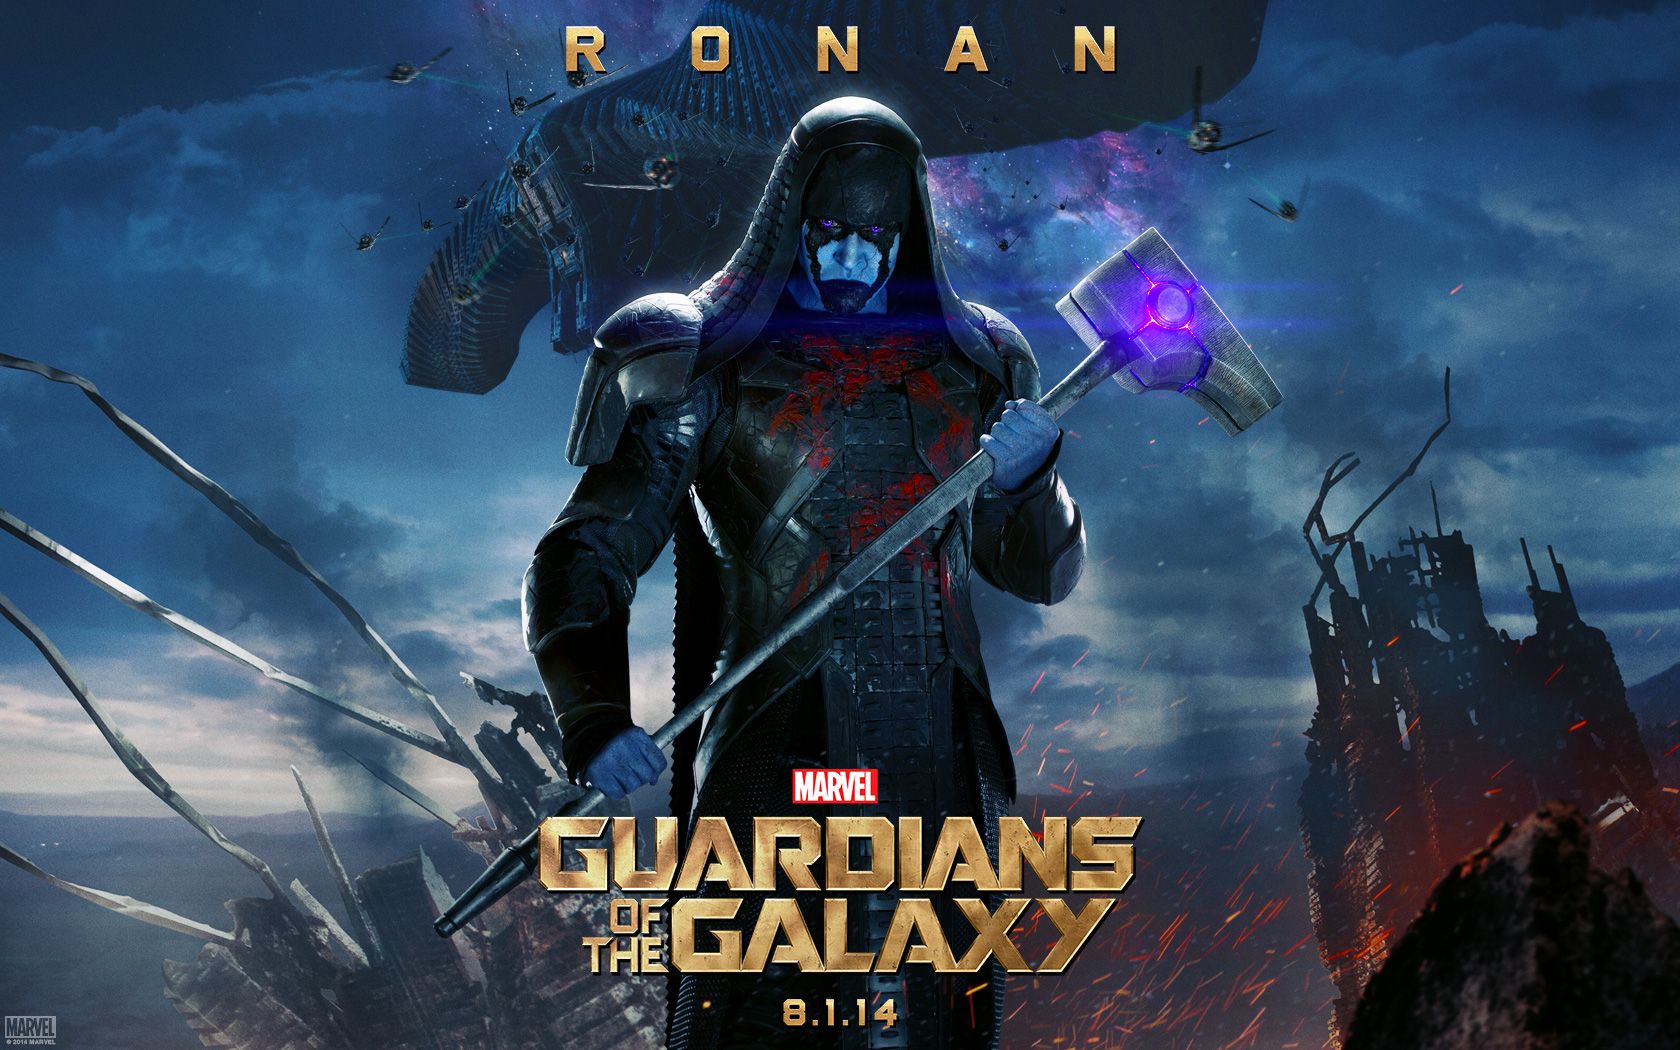 Ronan the Accuser Wallpaper. Ronan Guardians of the Galaxy Wallpaper, Ronan the Accuser Wallpaper and Saoirse Ronan Wallpaper